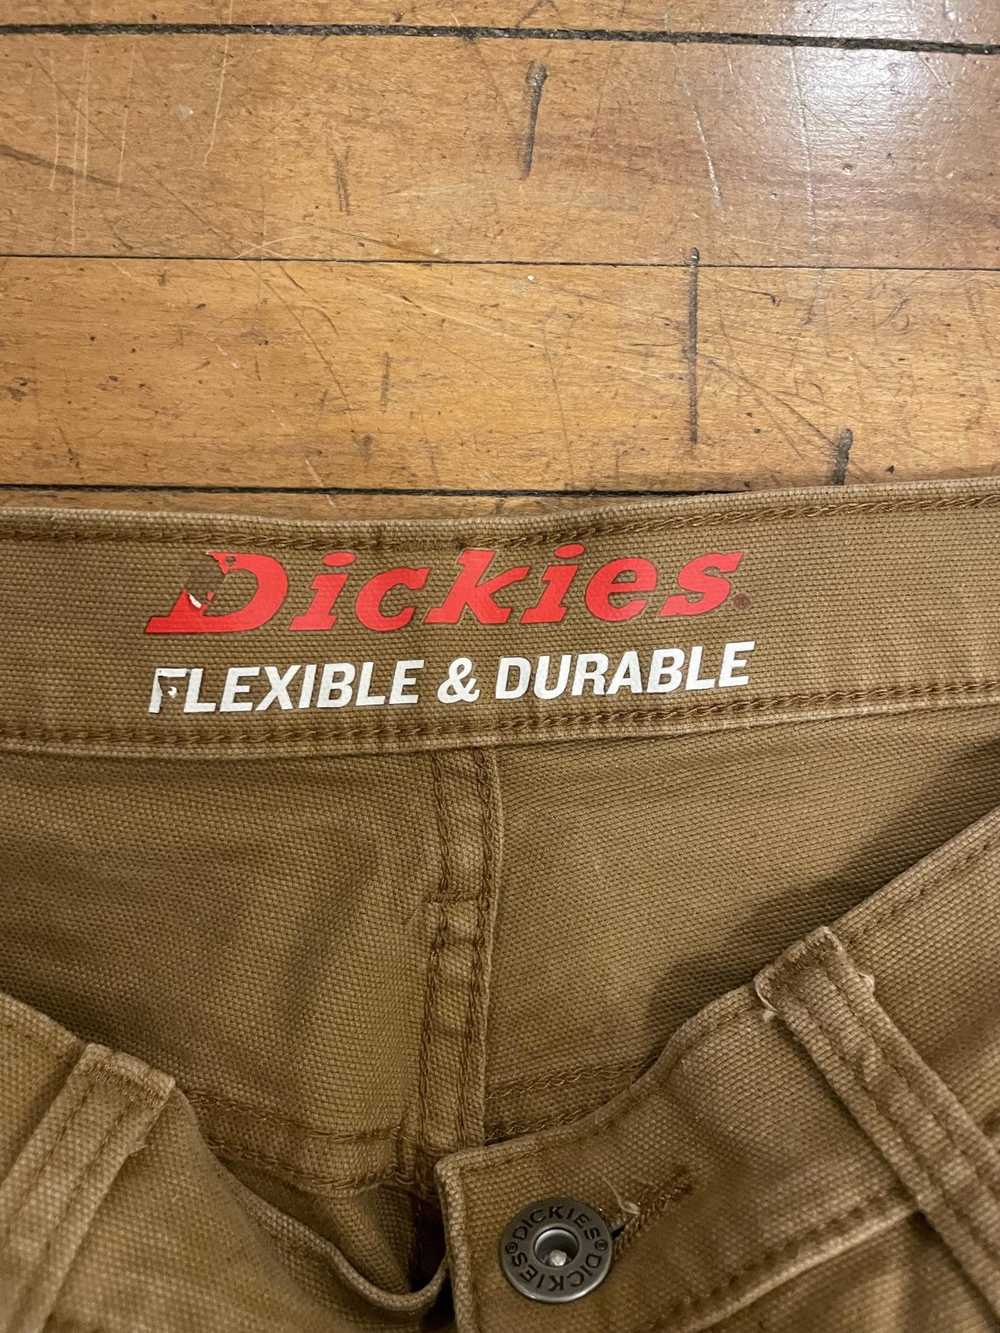 Dickies Dickies, Flexible & Durable, Khaki Pants,… - image 10